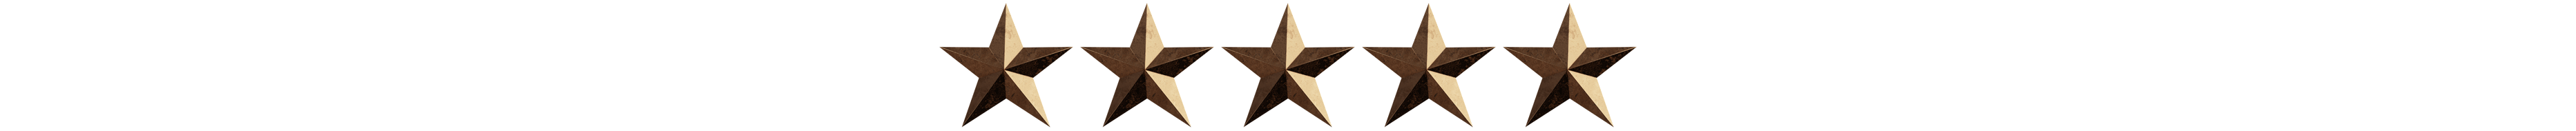 graphic of five brass stars